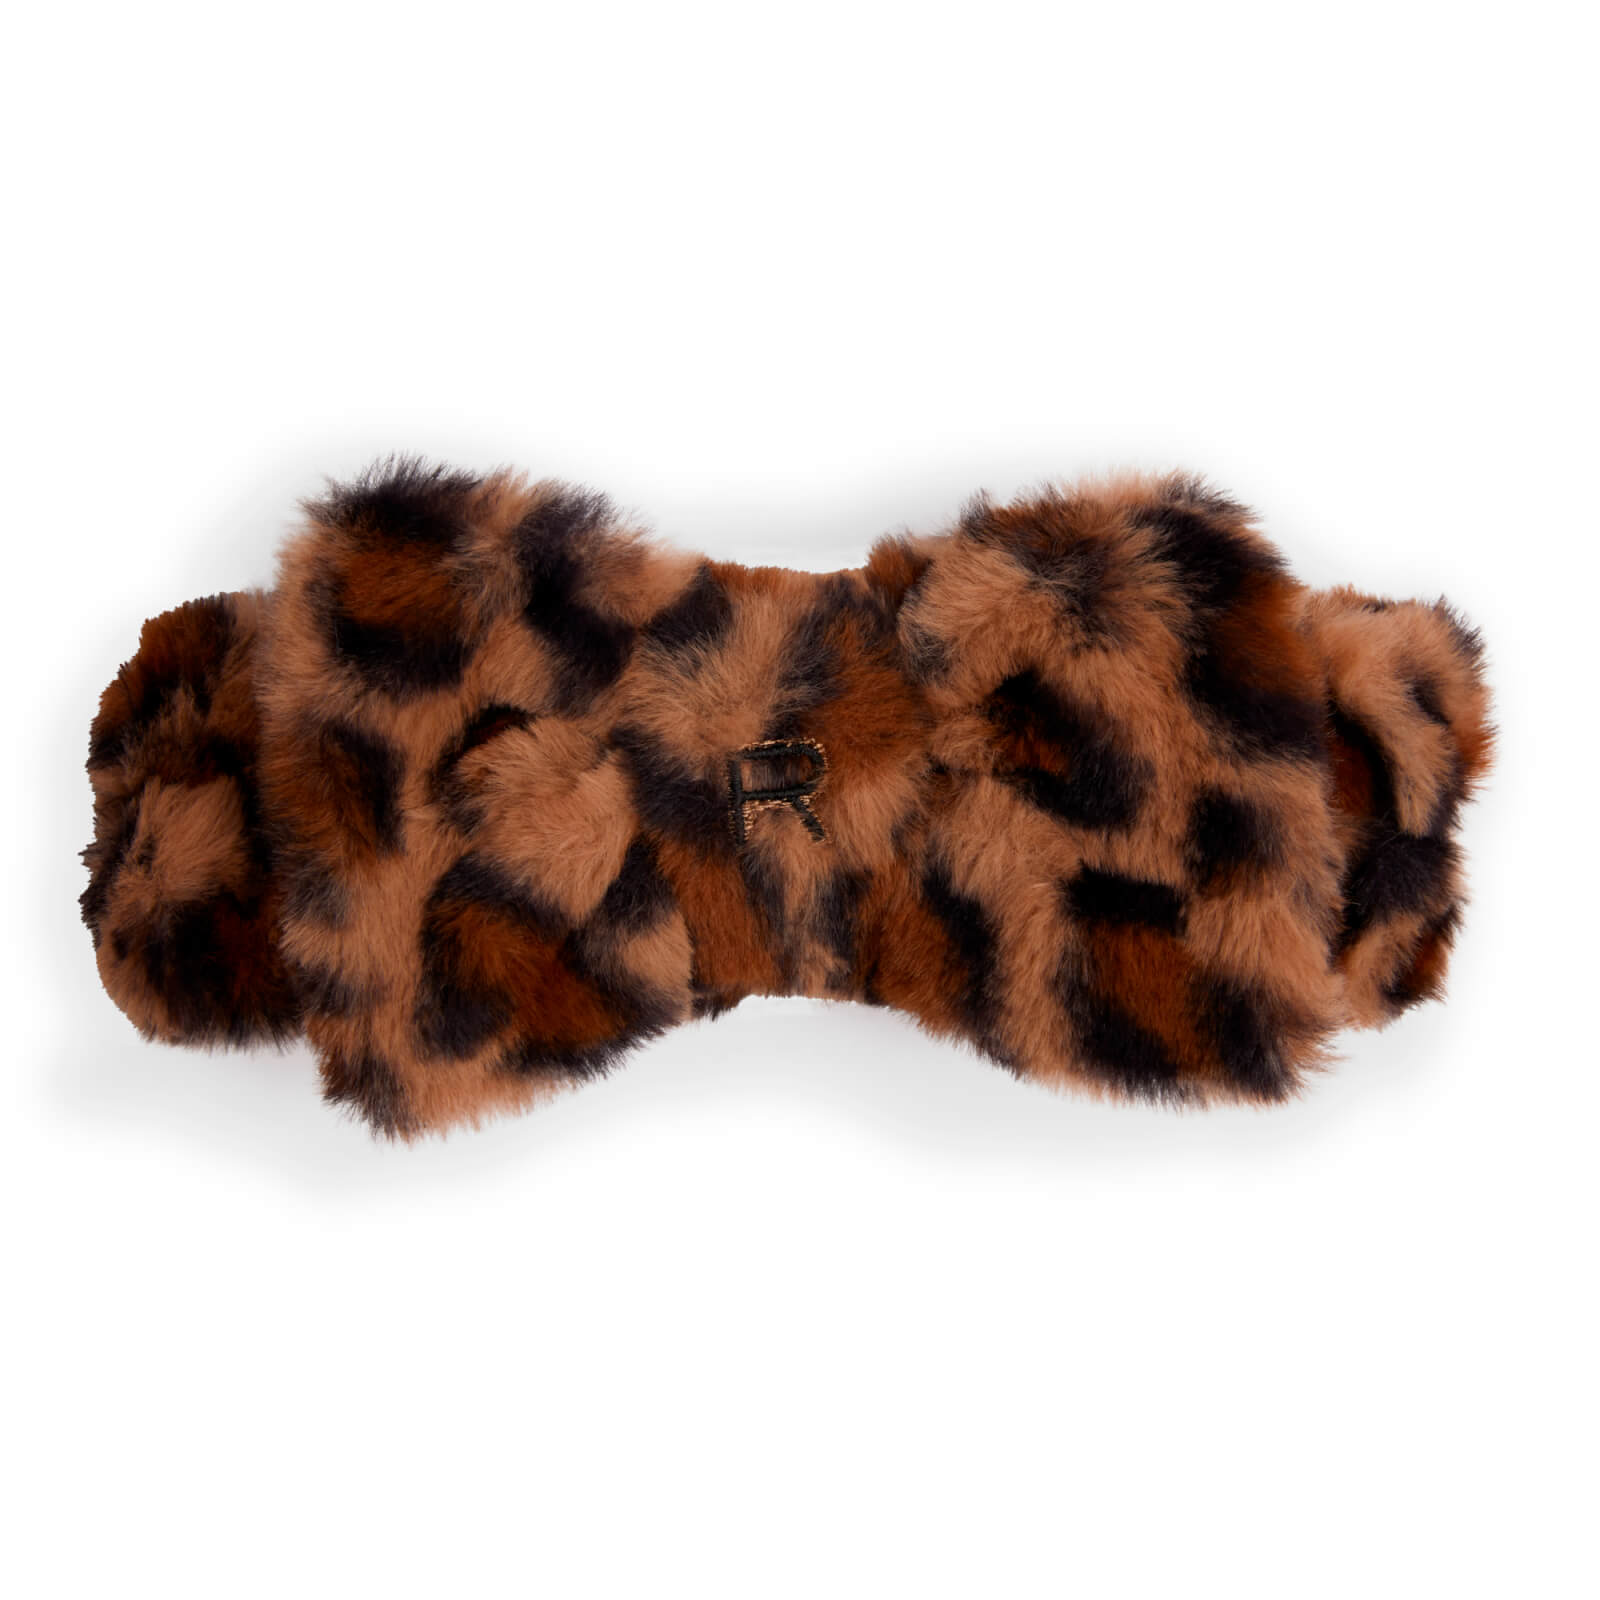 Revolution Skincare Leopard Print Headband